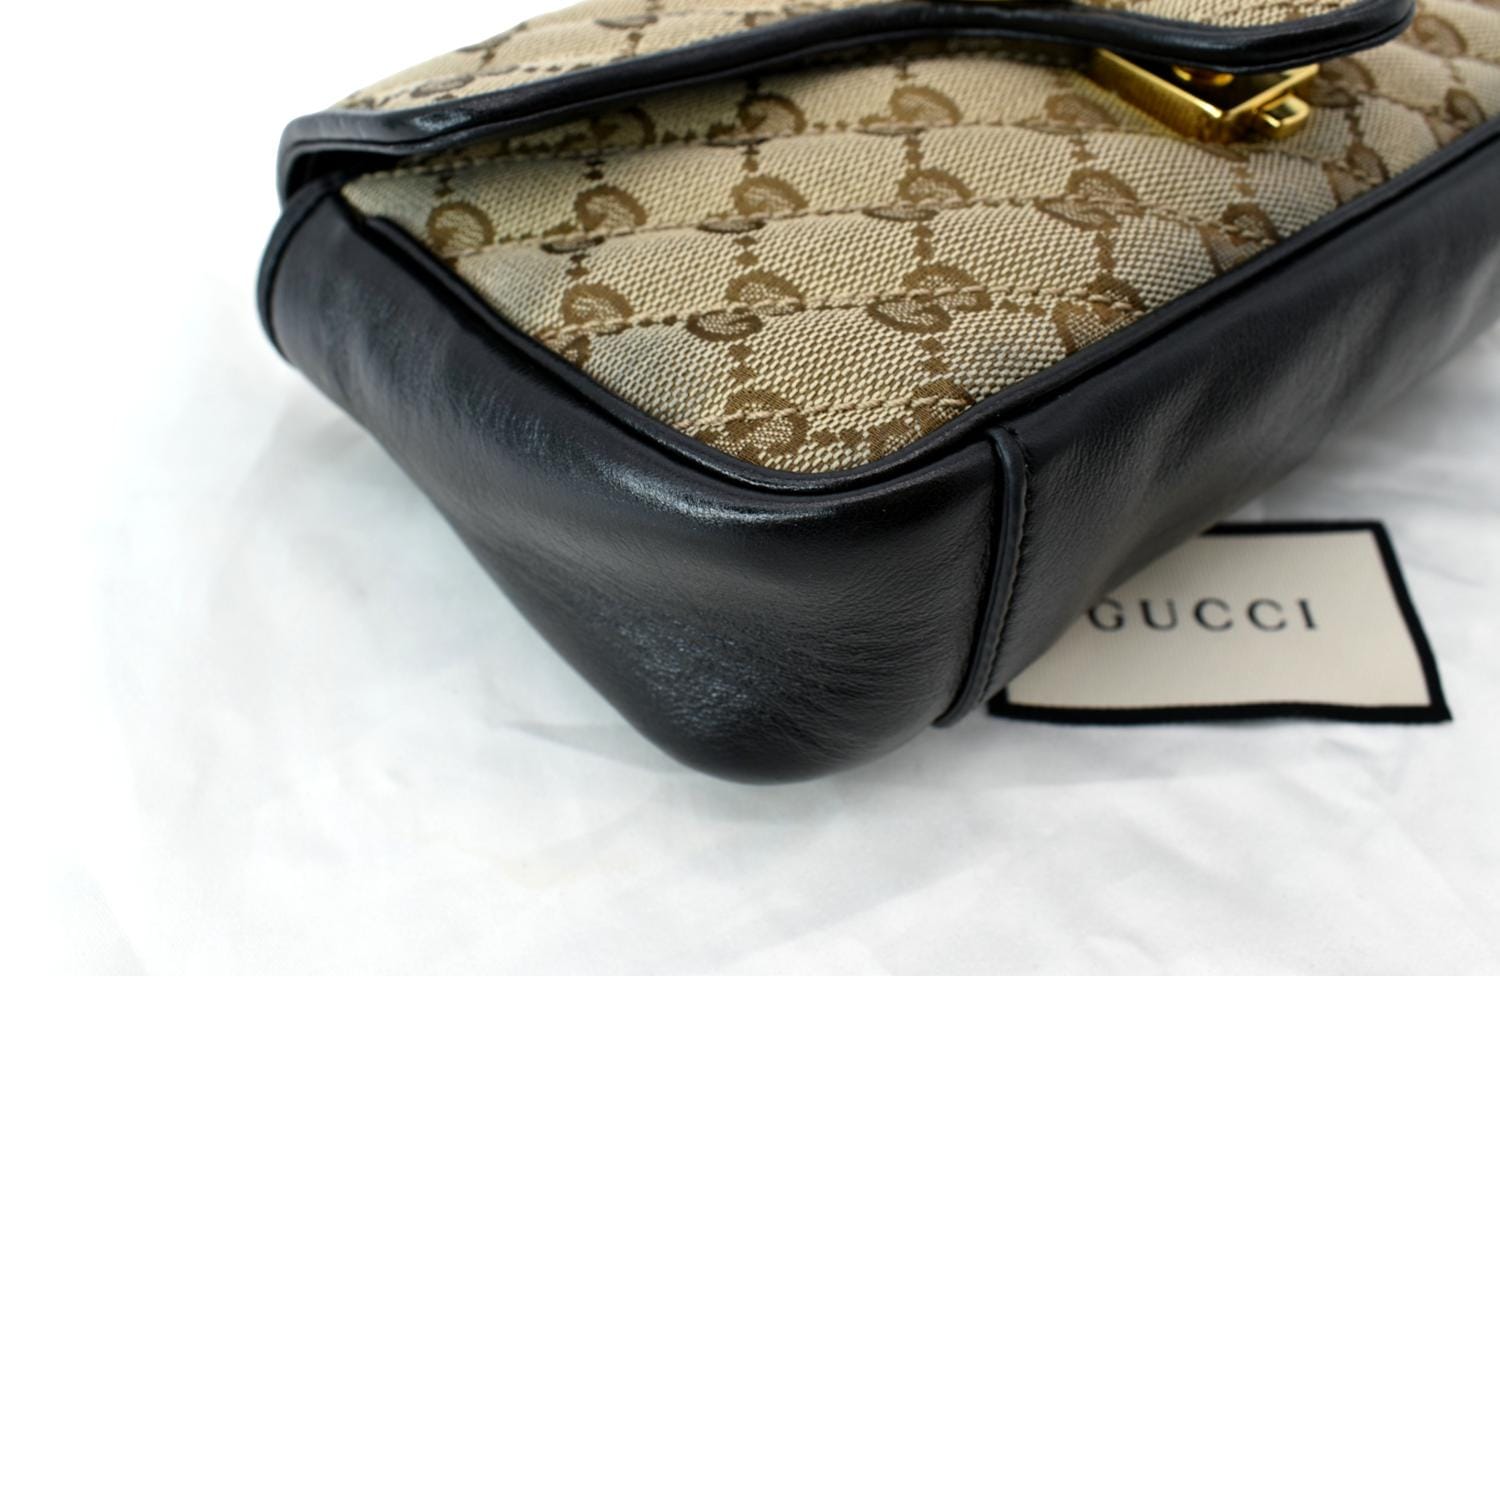 Gucci, Bags, 95s Authenticrare Vintage Gucci Leather Purse